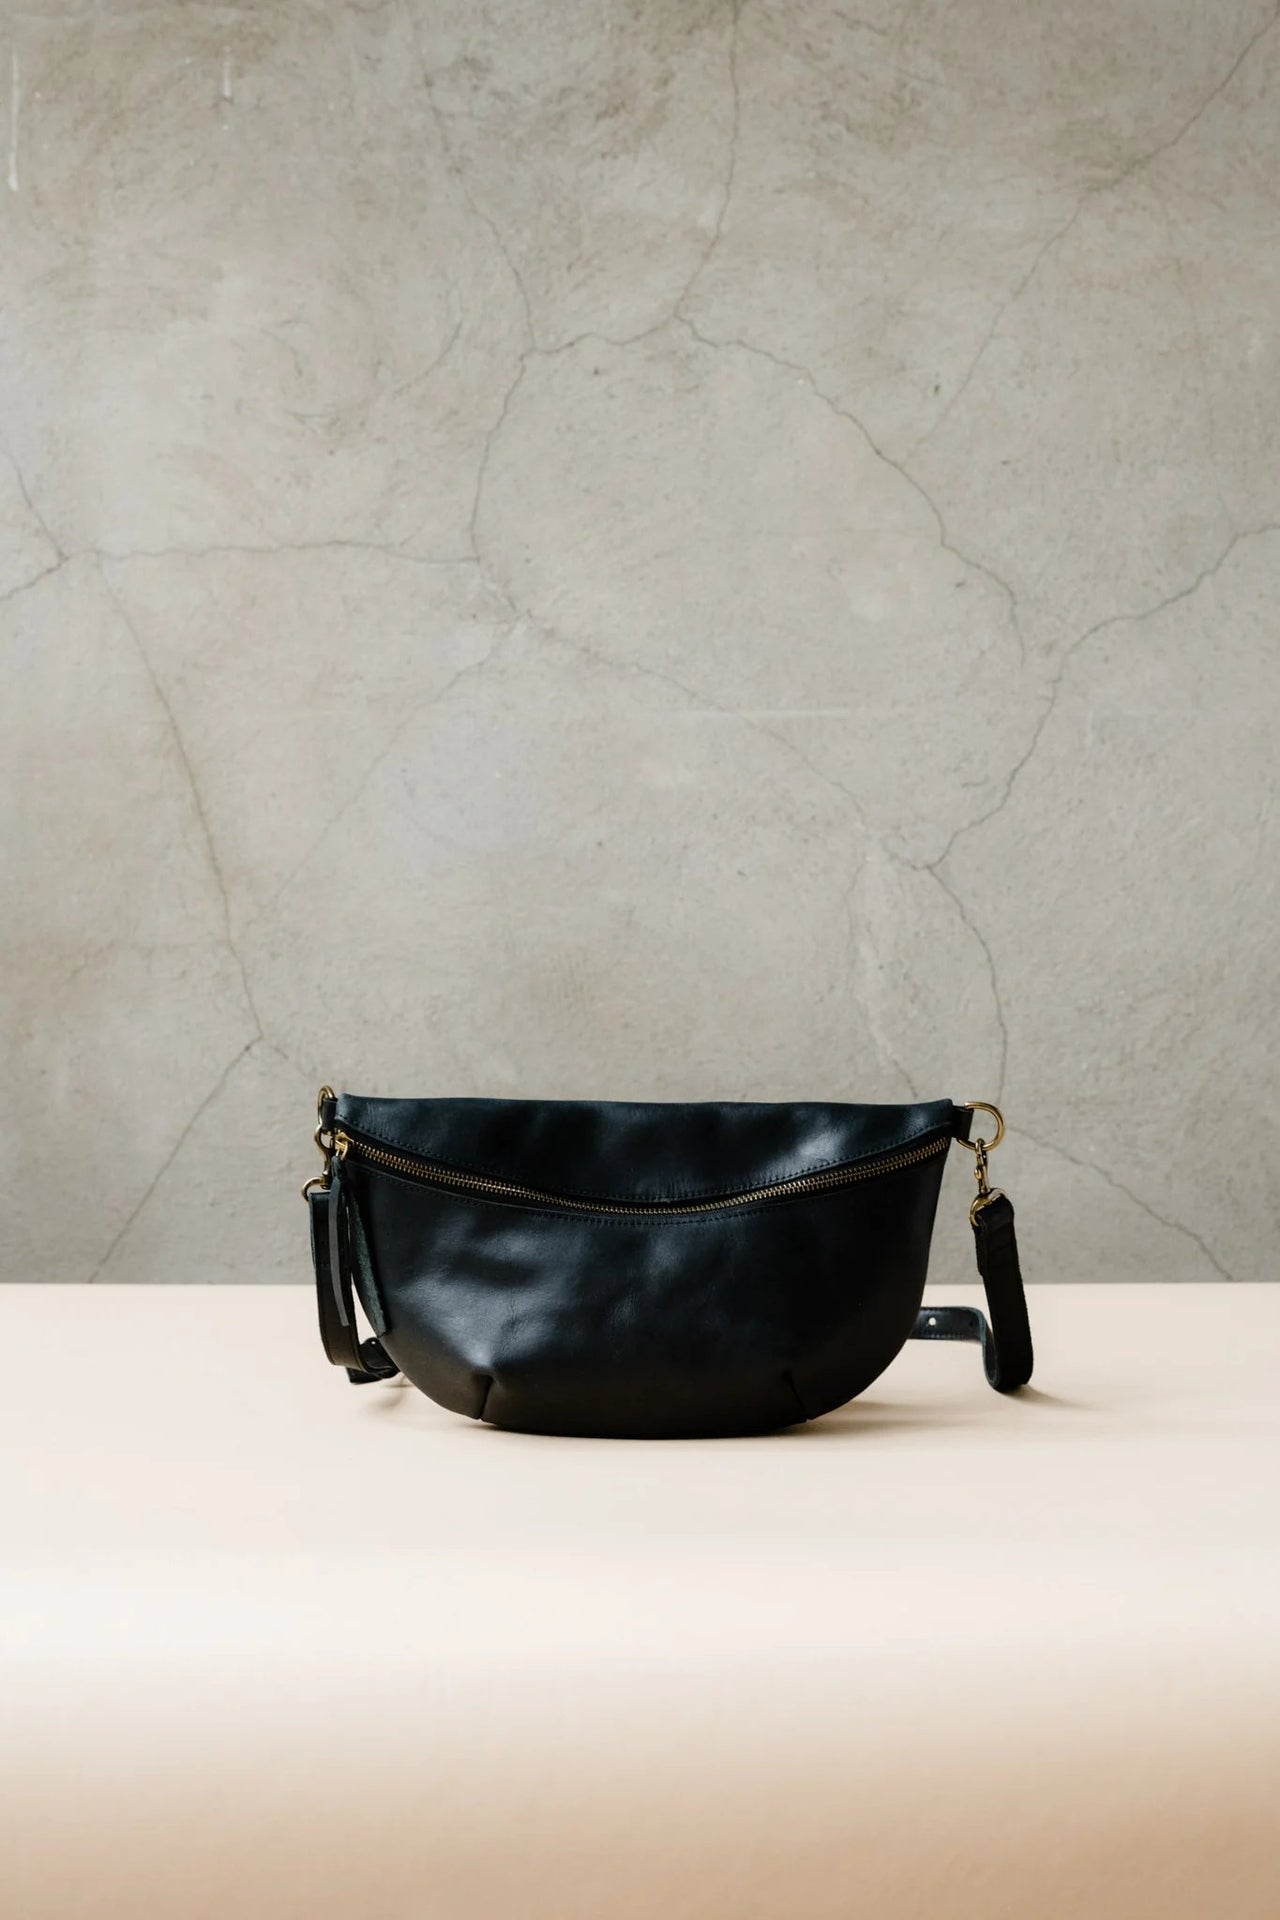 Berkeley leather handbag